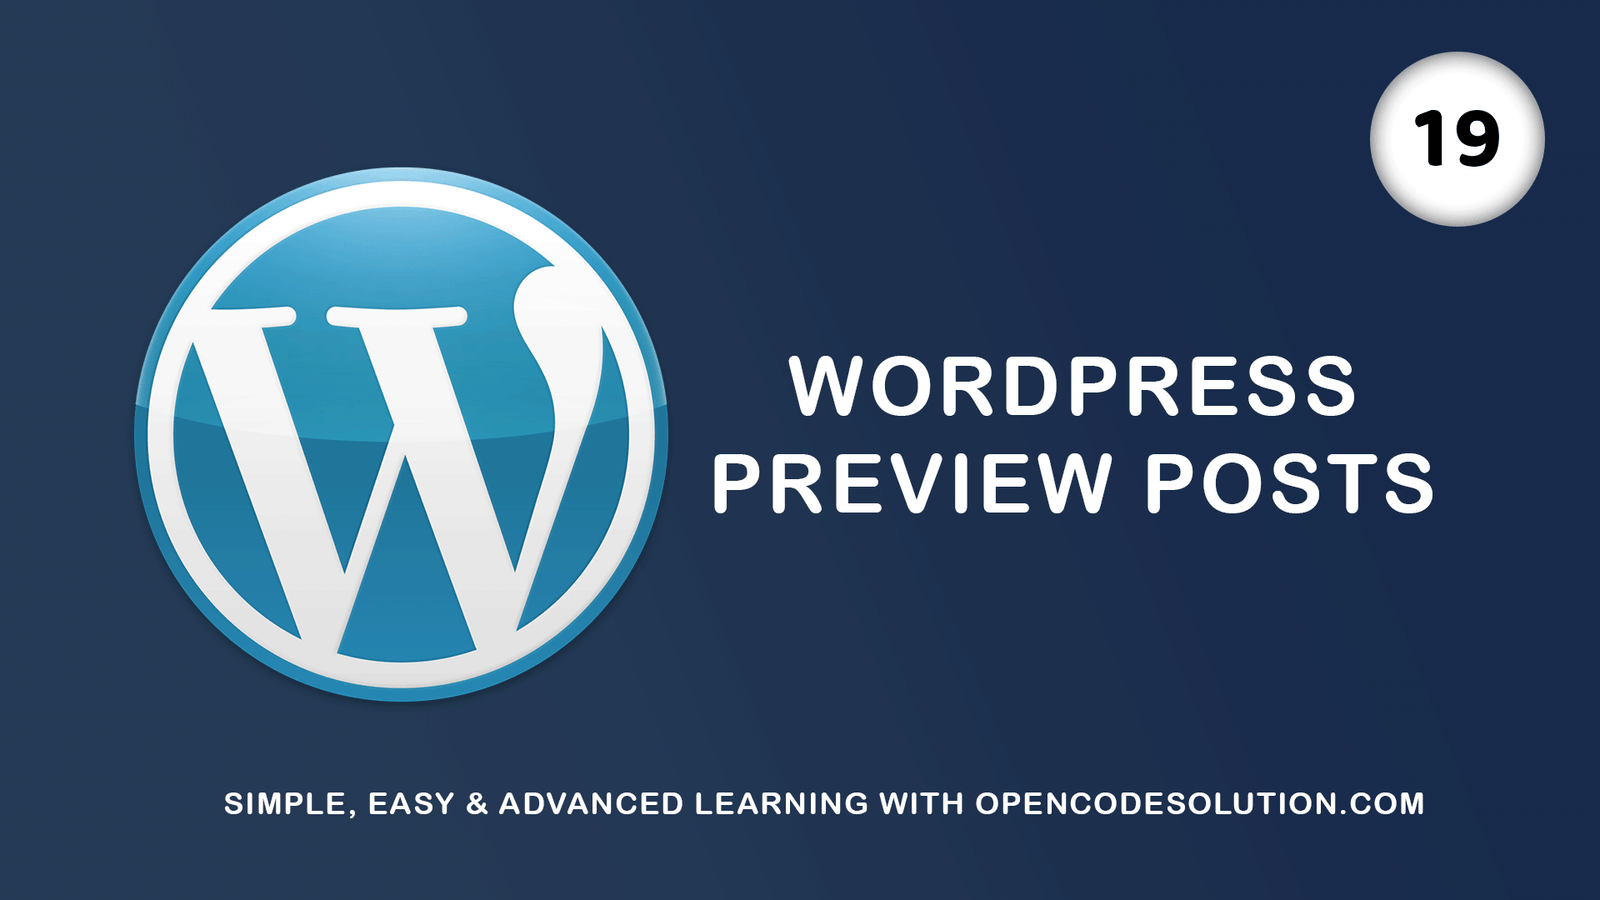 WordPress Preview Posts #19